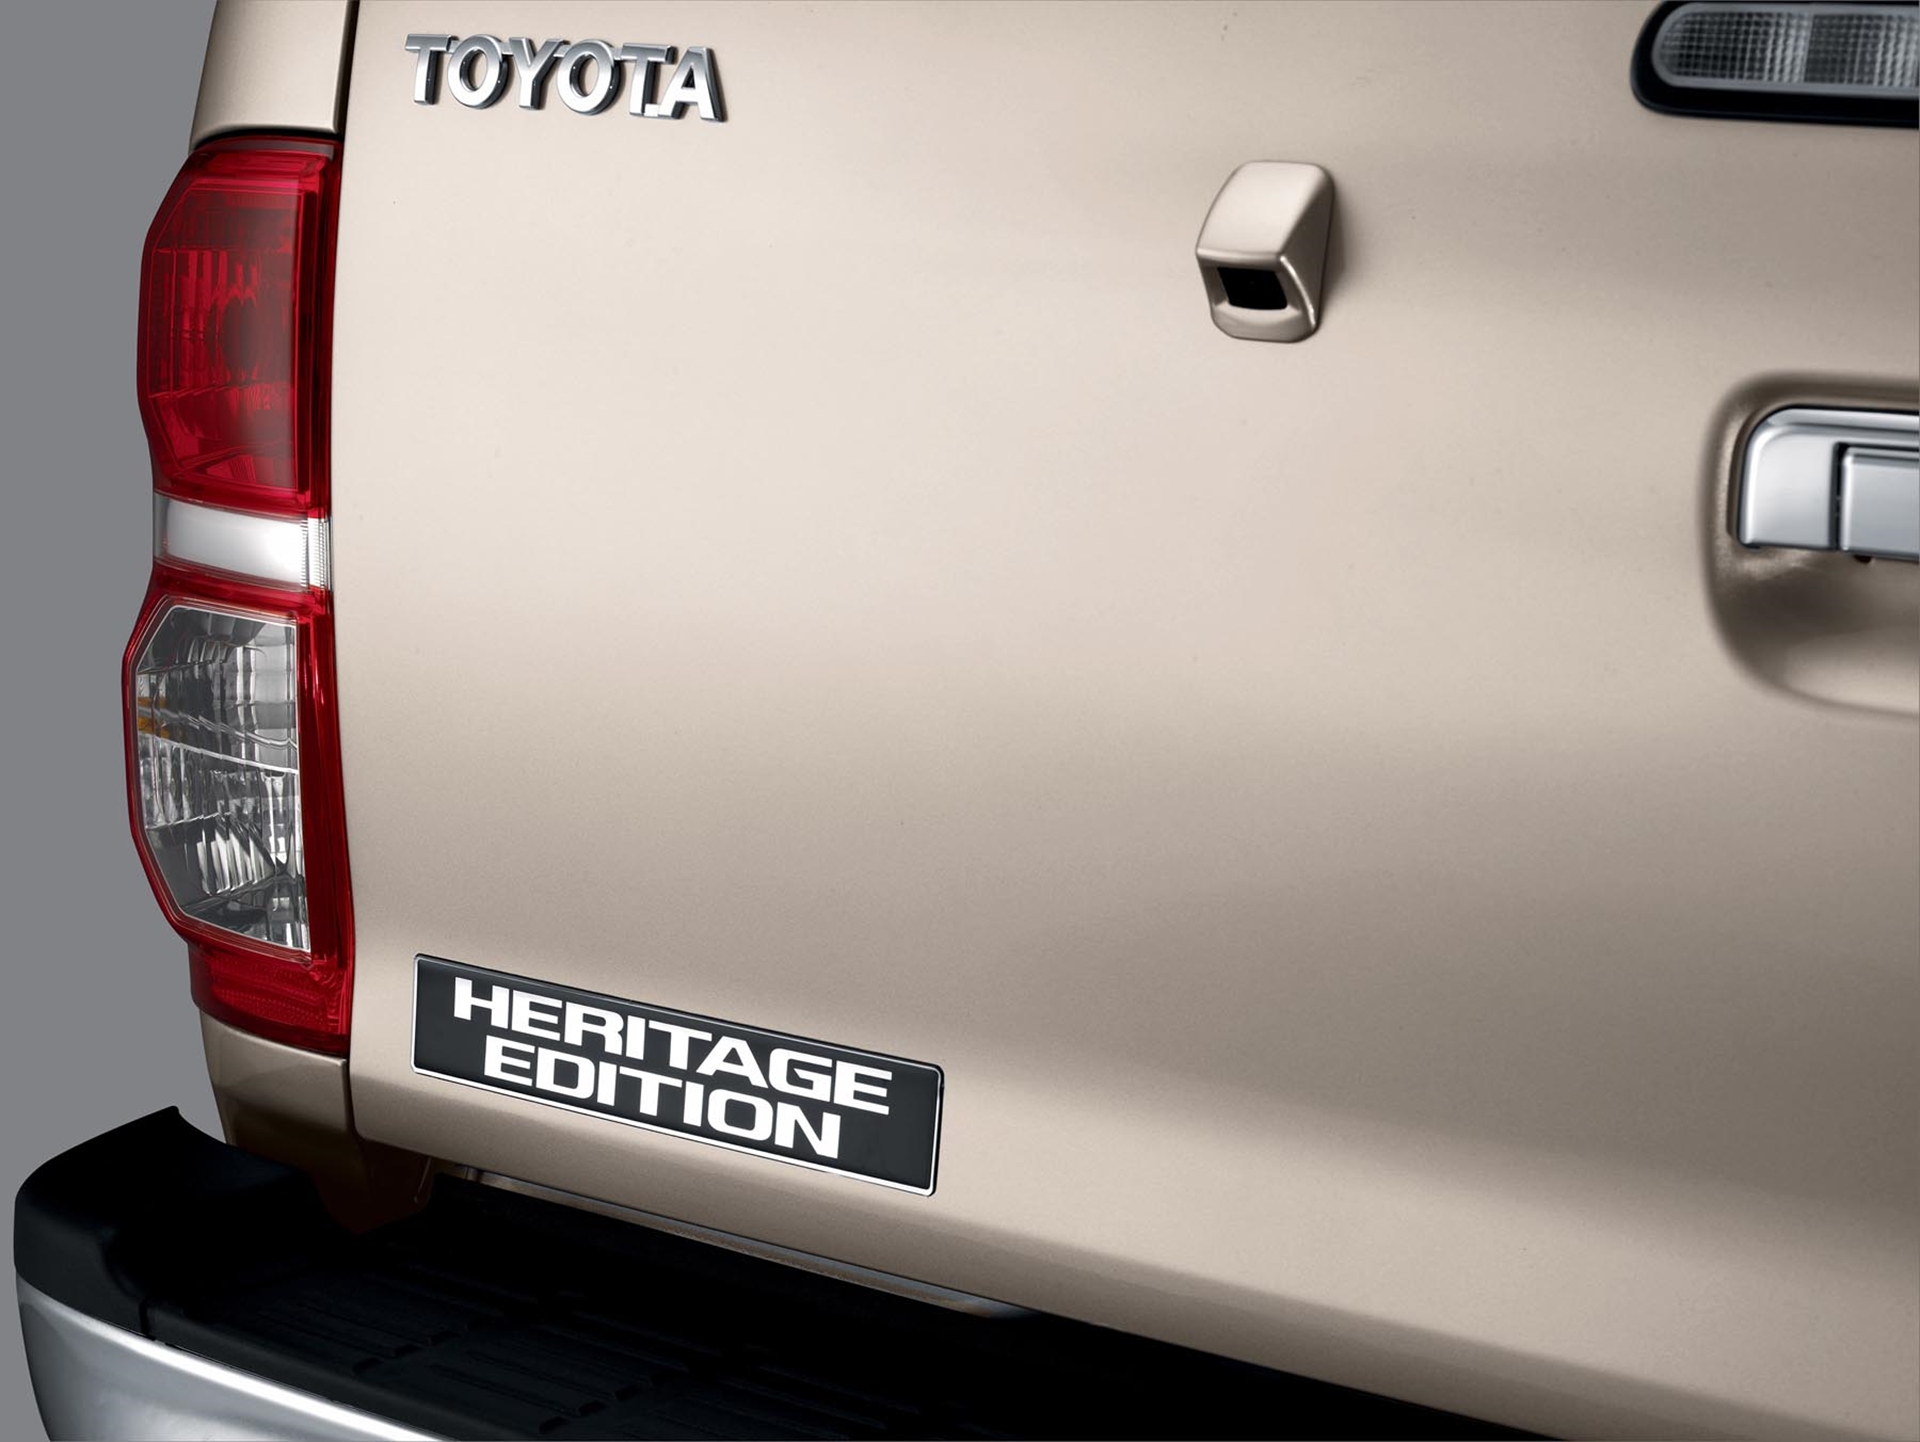 Toyota Heritage Edition